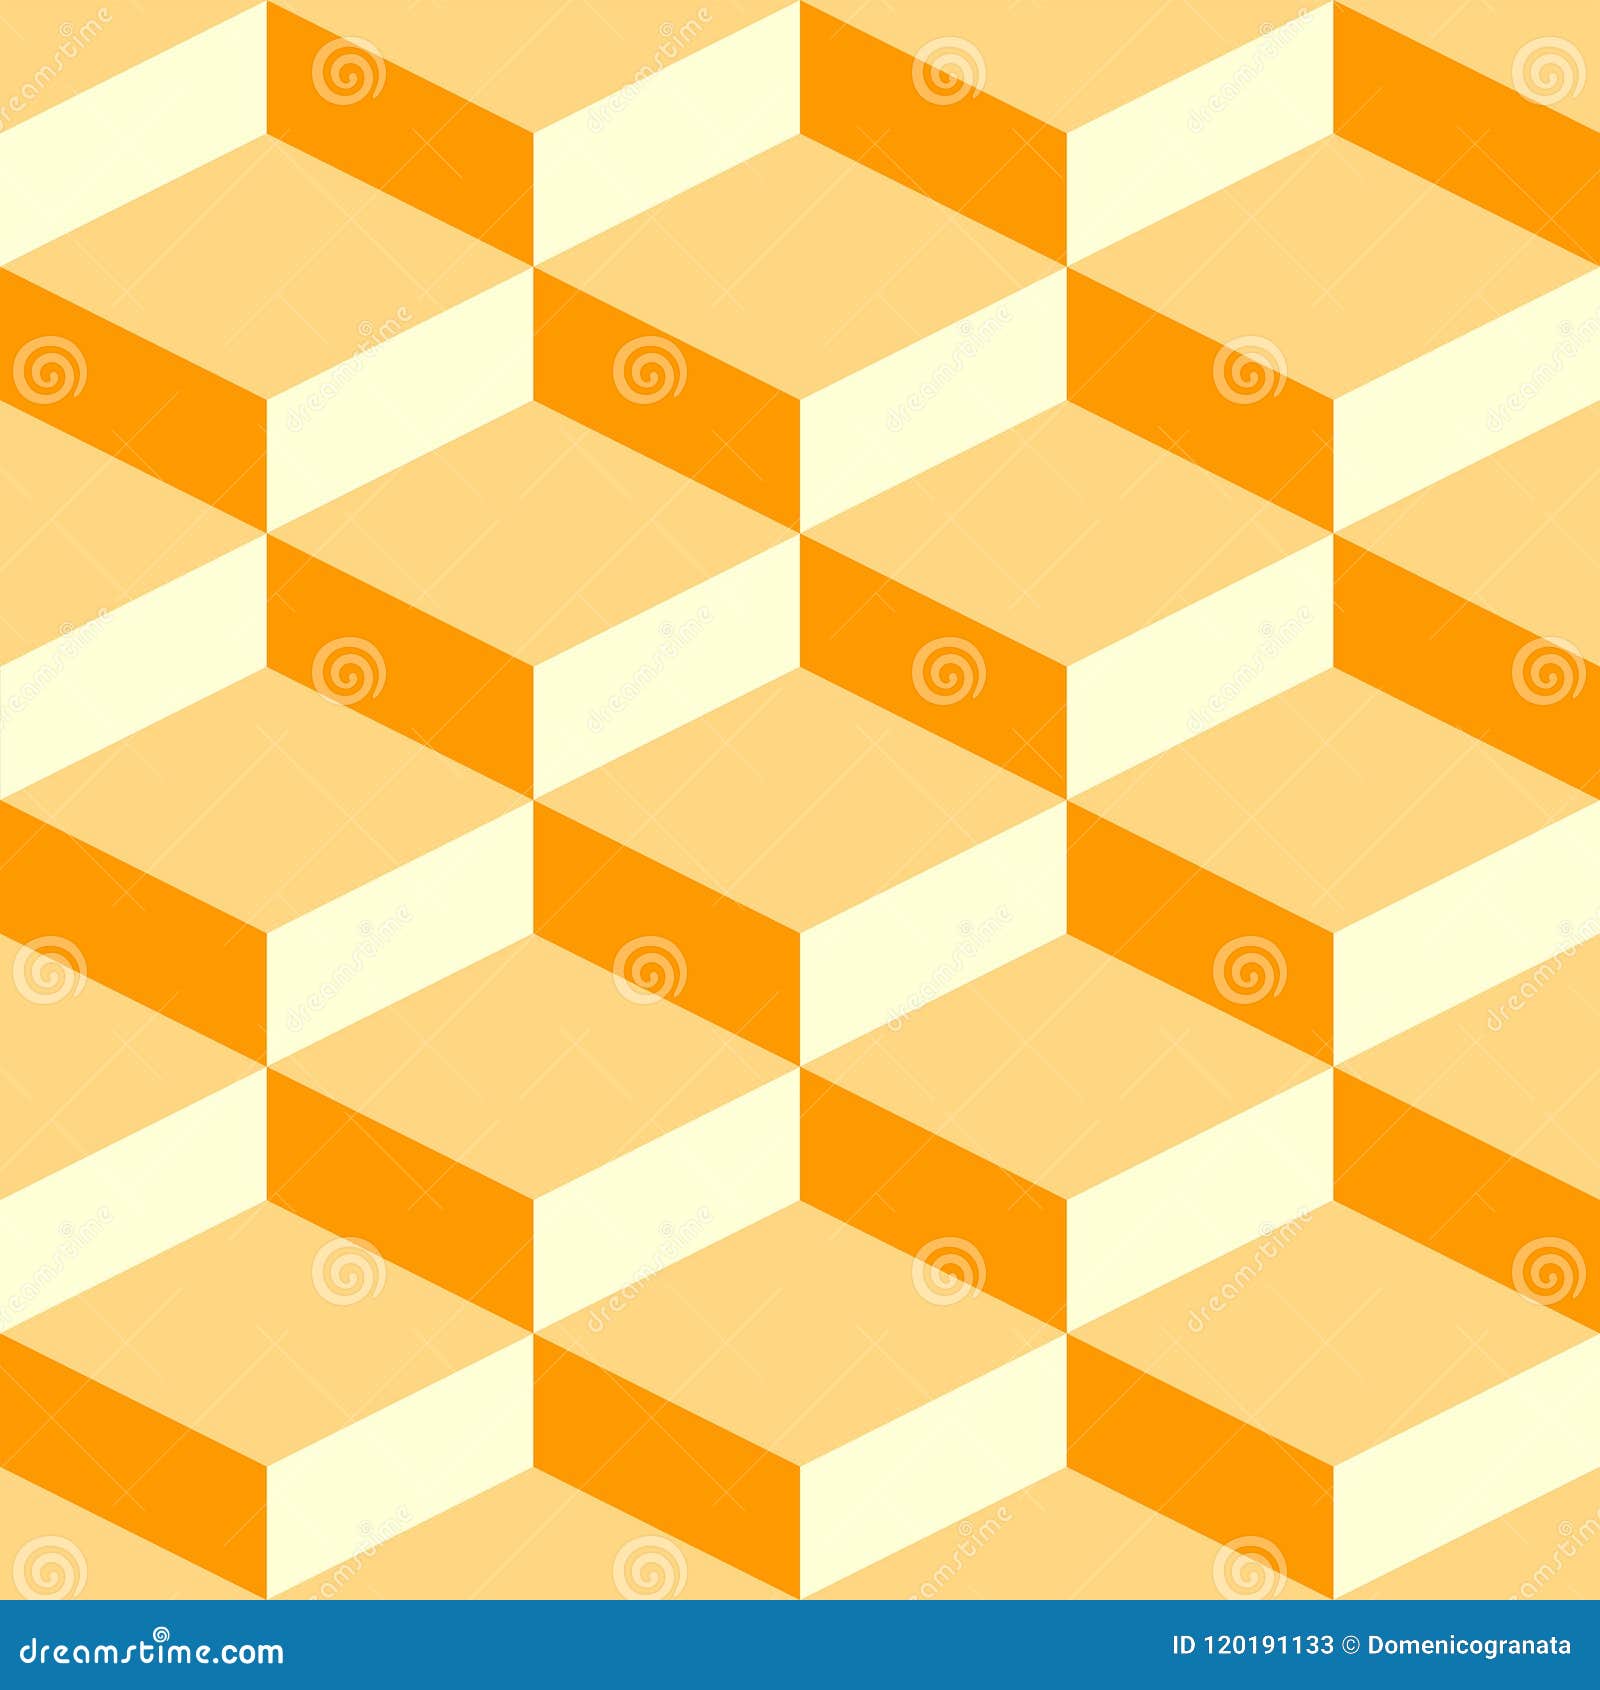 geometric pattern with light orange squares